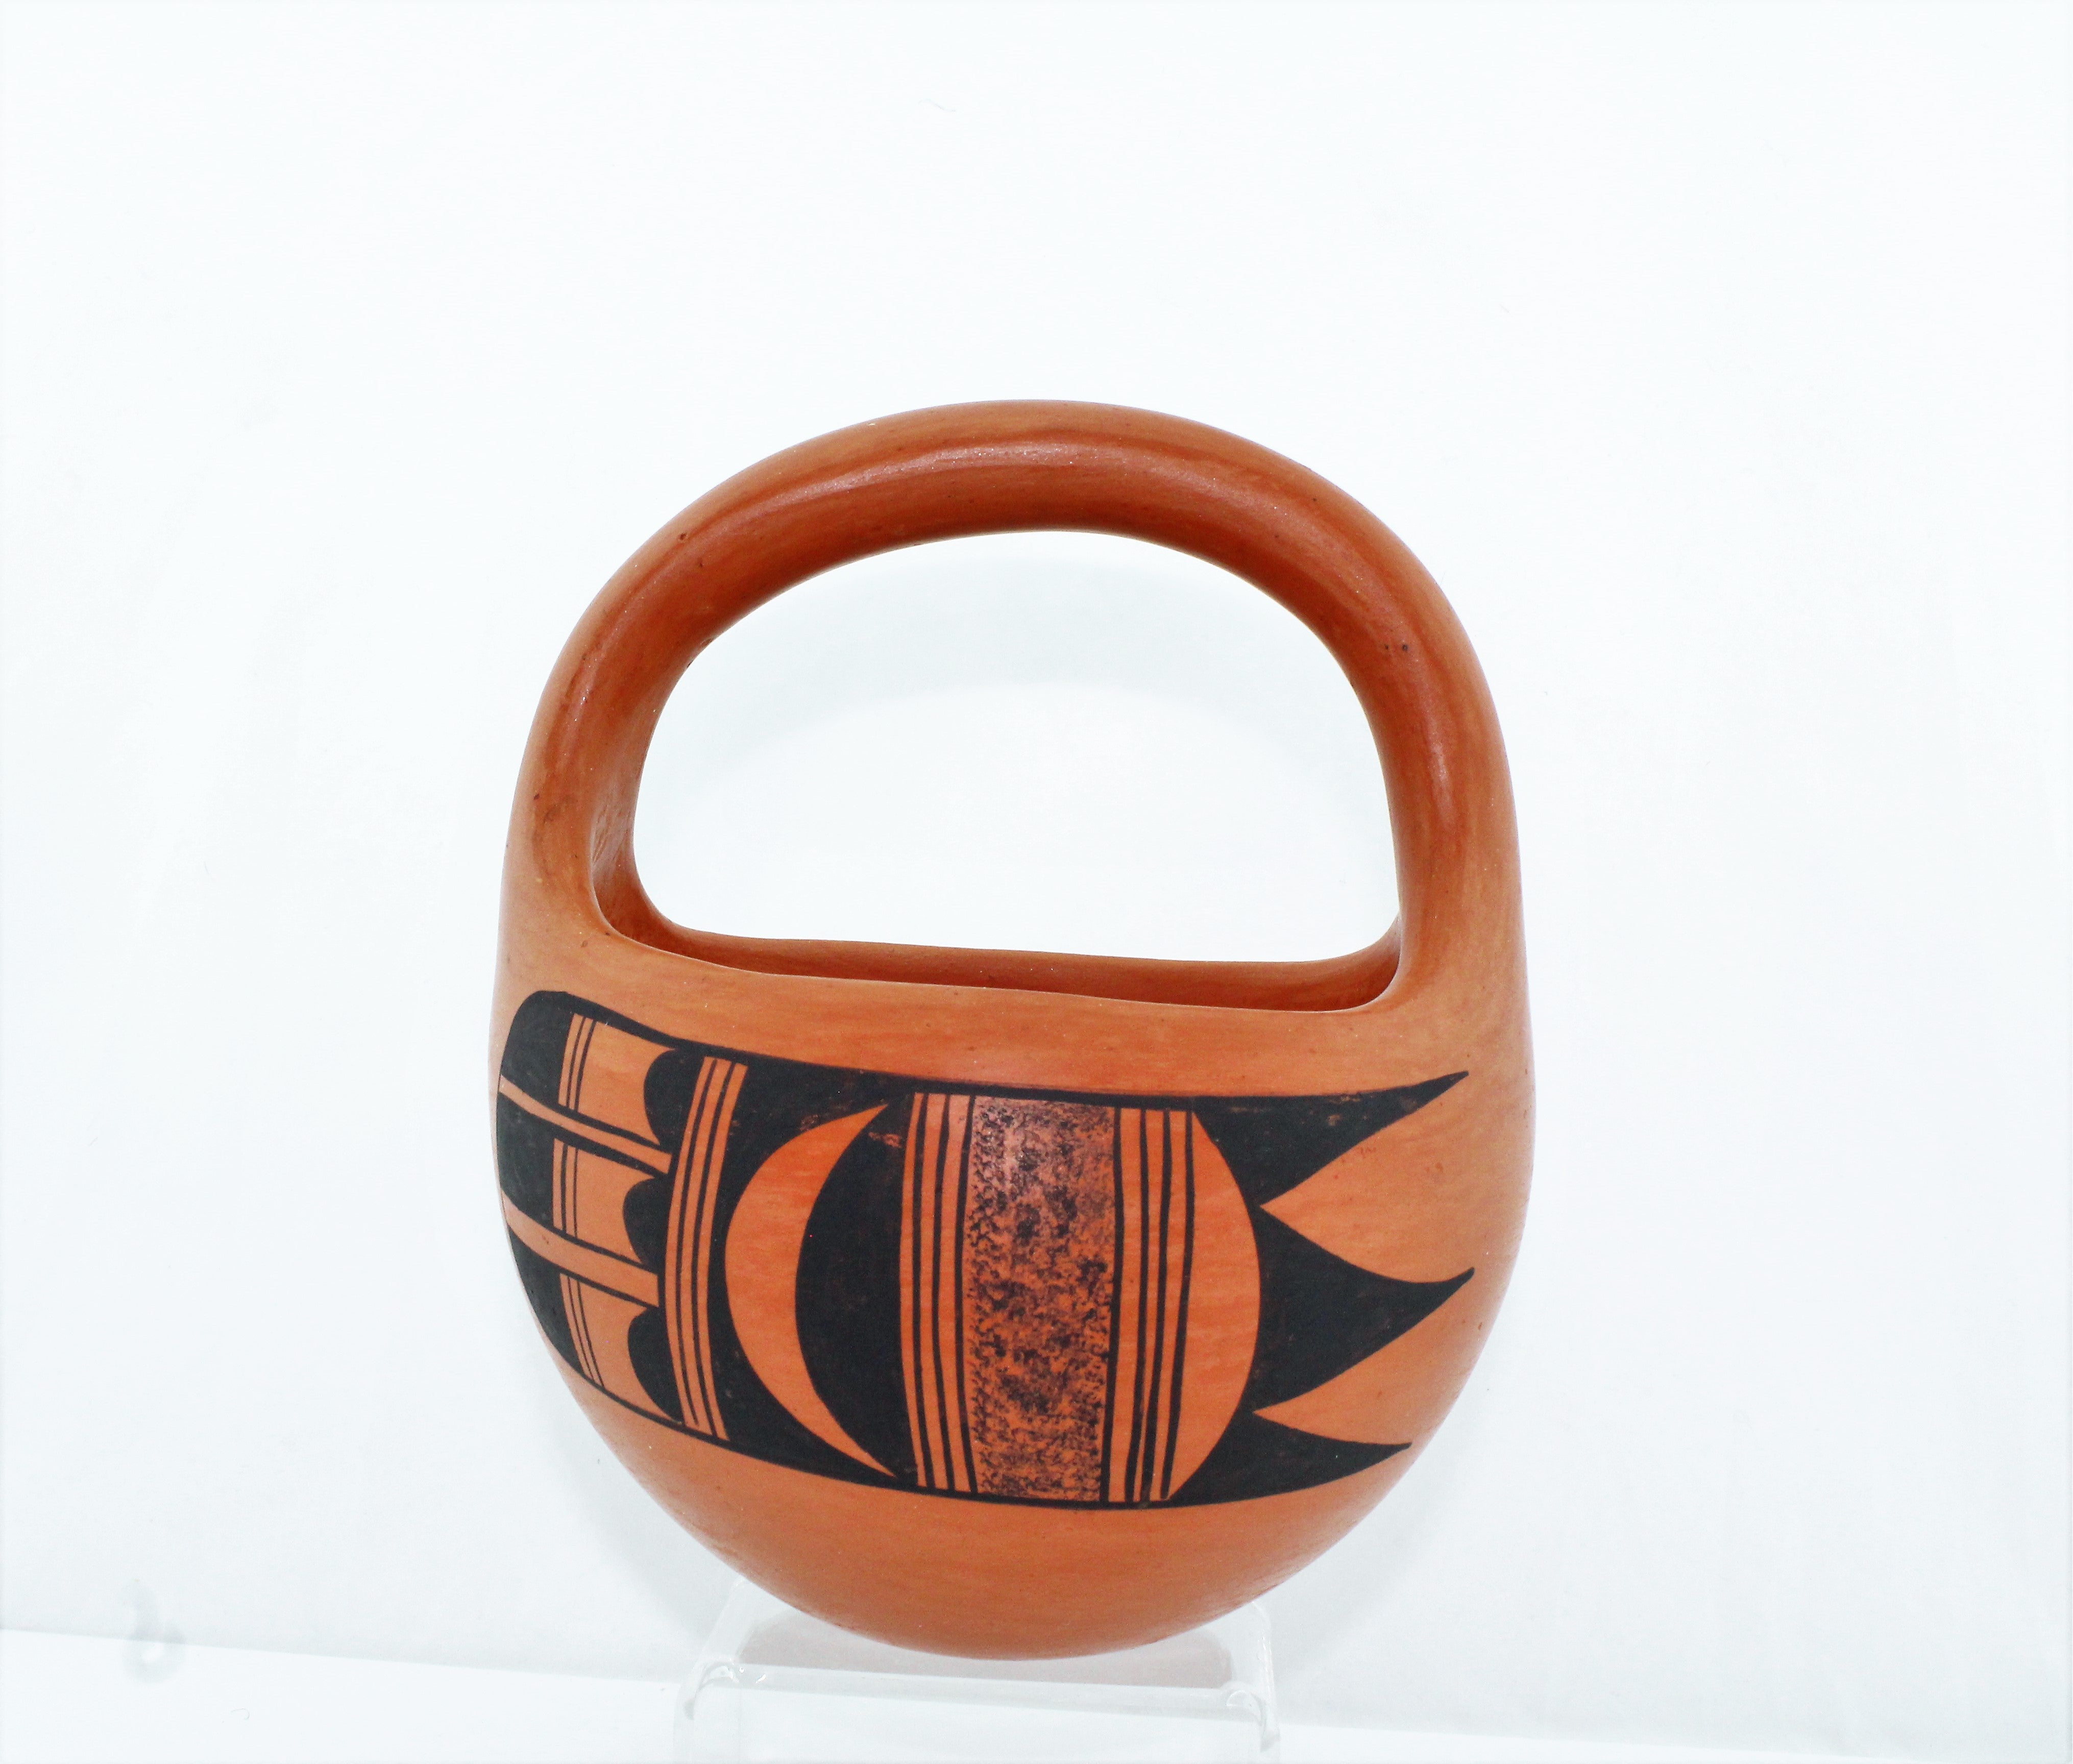 Evelyn Poolheco Hopi Tewa Pottery Basket